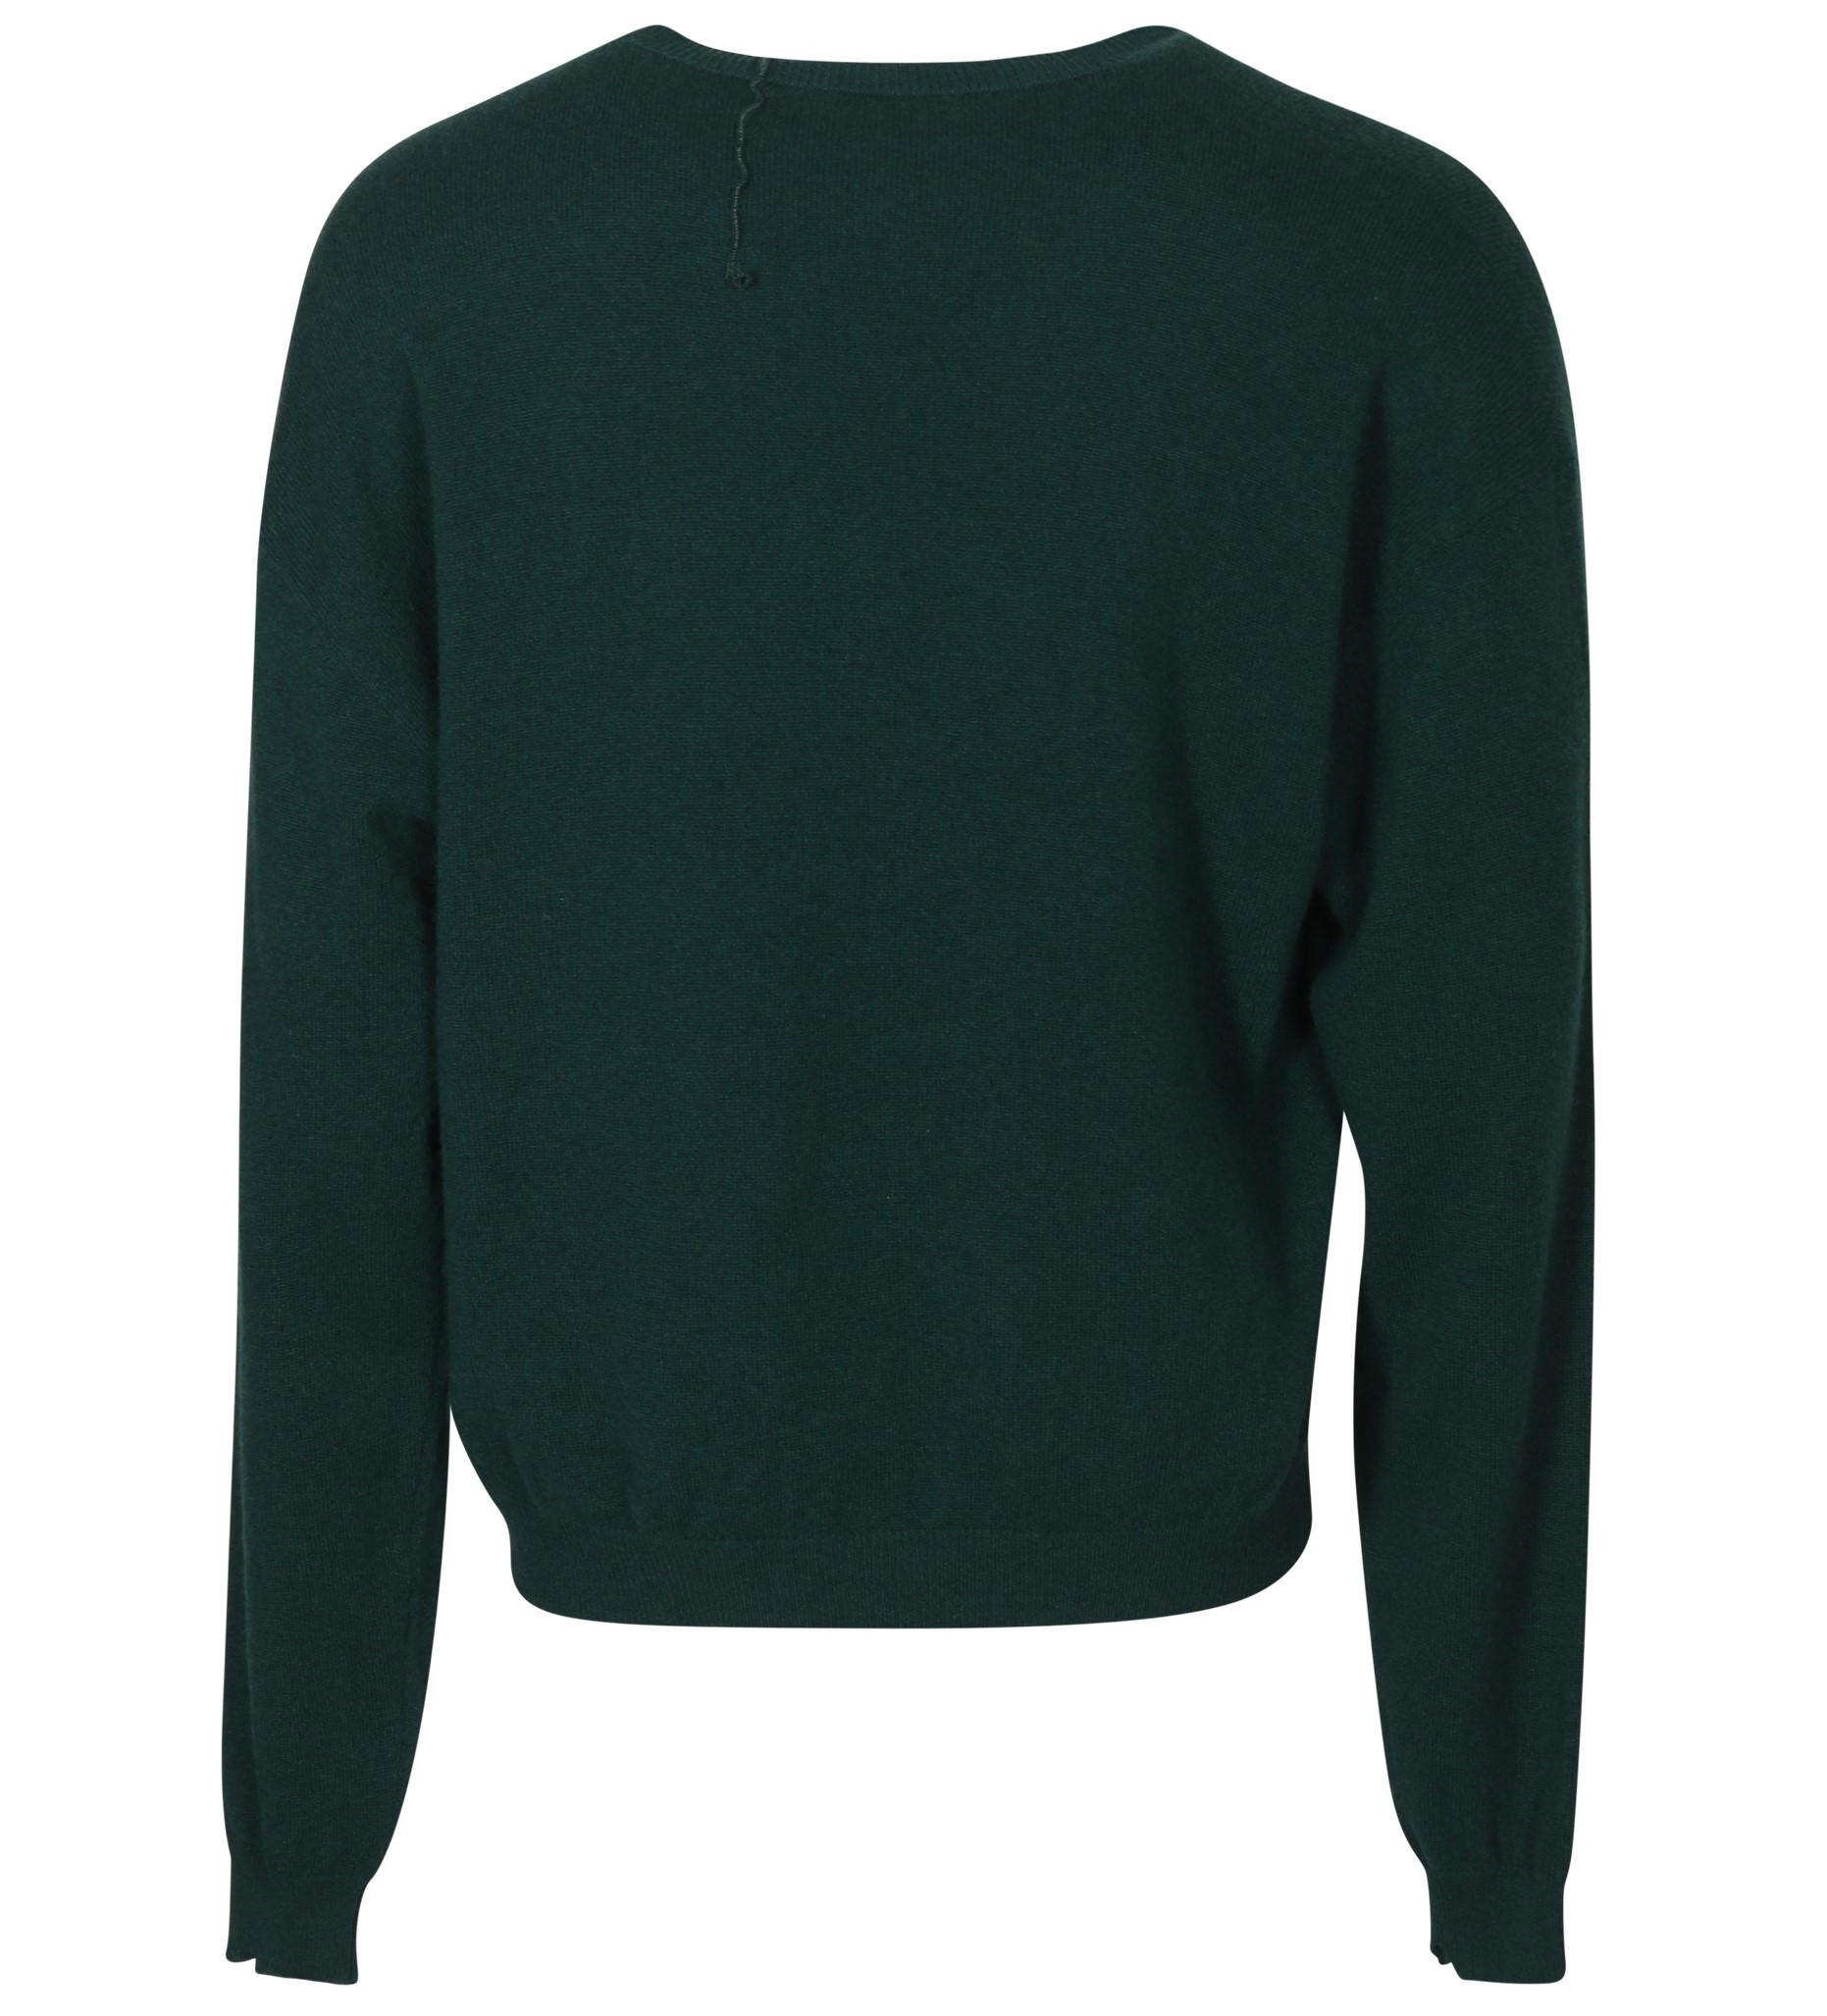 RAMAEL Infinity Cashmere Sweater in Green XS